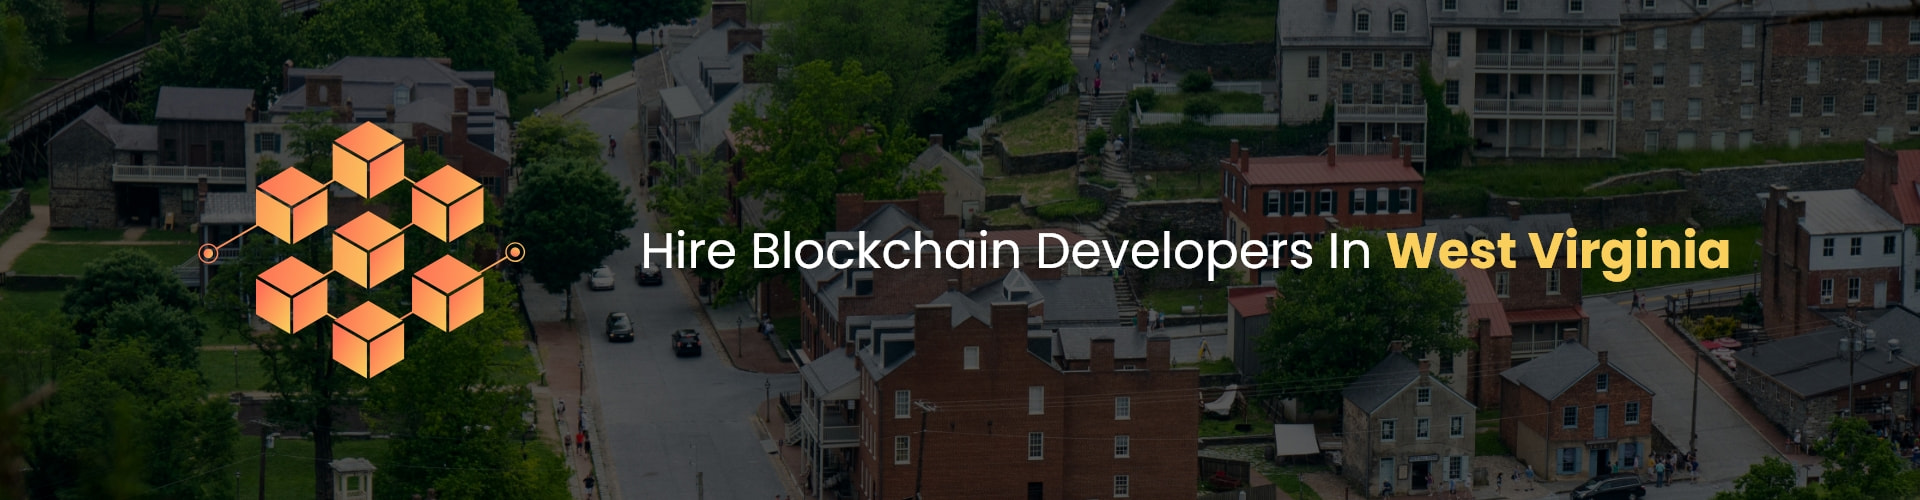 hire blockchain developers in west virginia